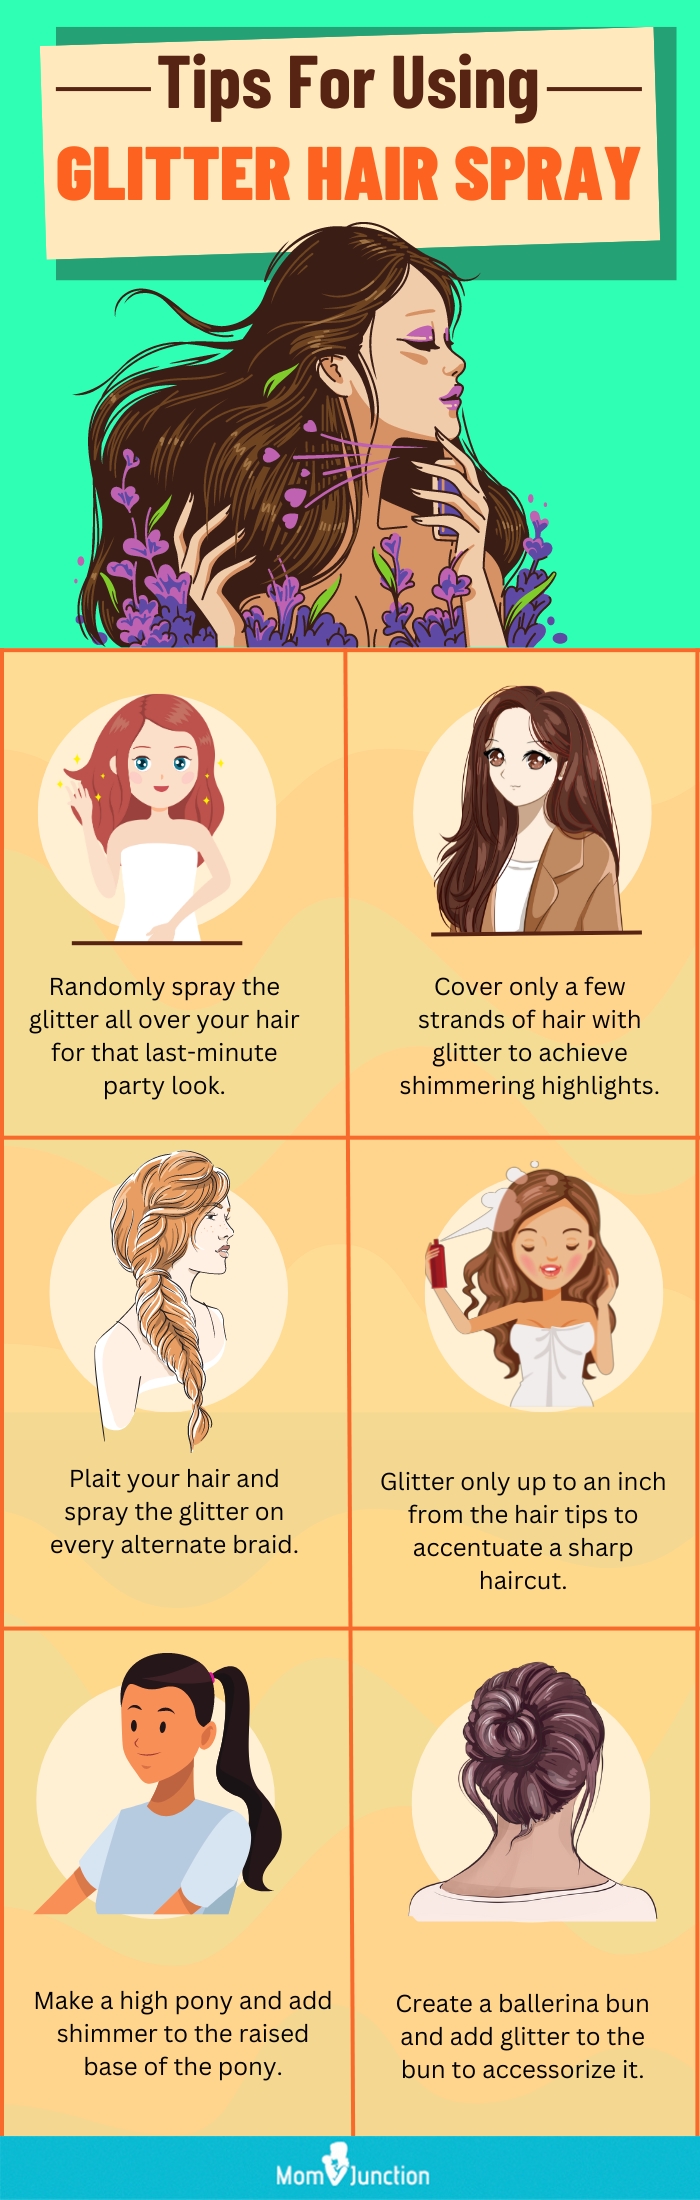 Tips For Using Glitter Hair Spray (infographic)